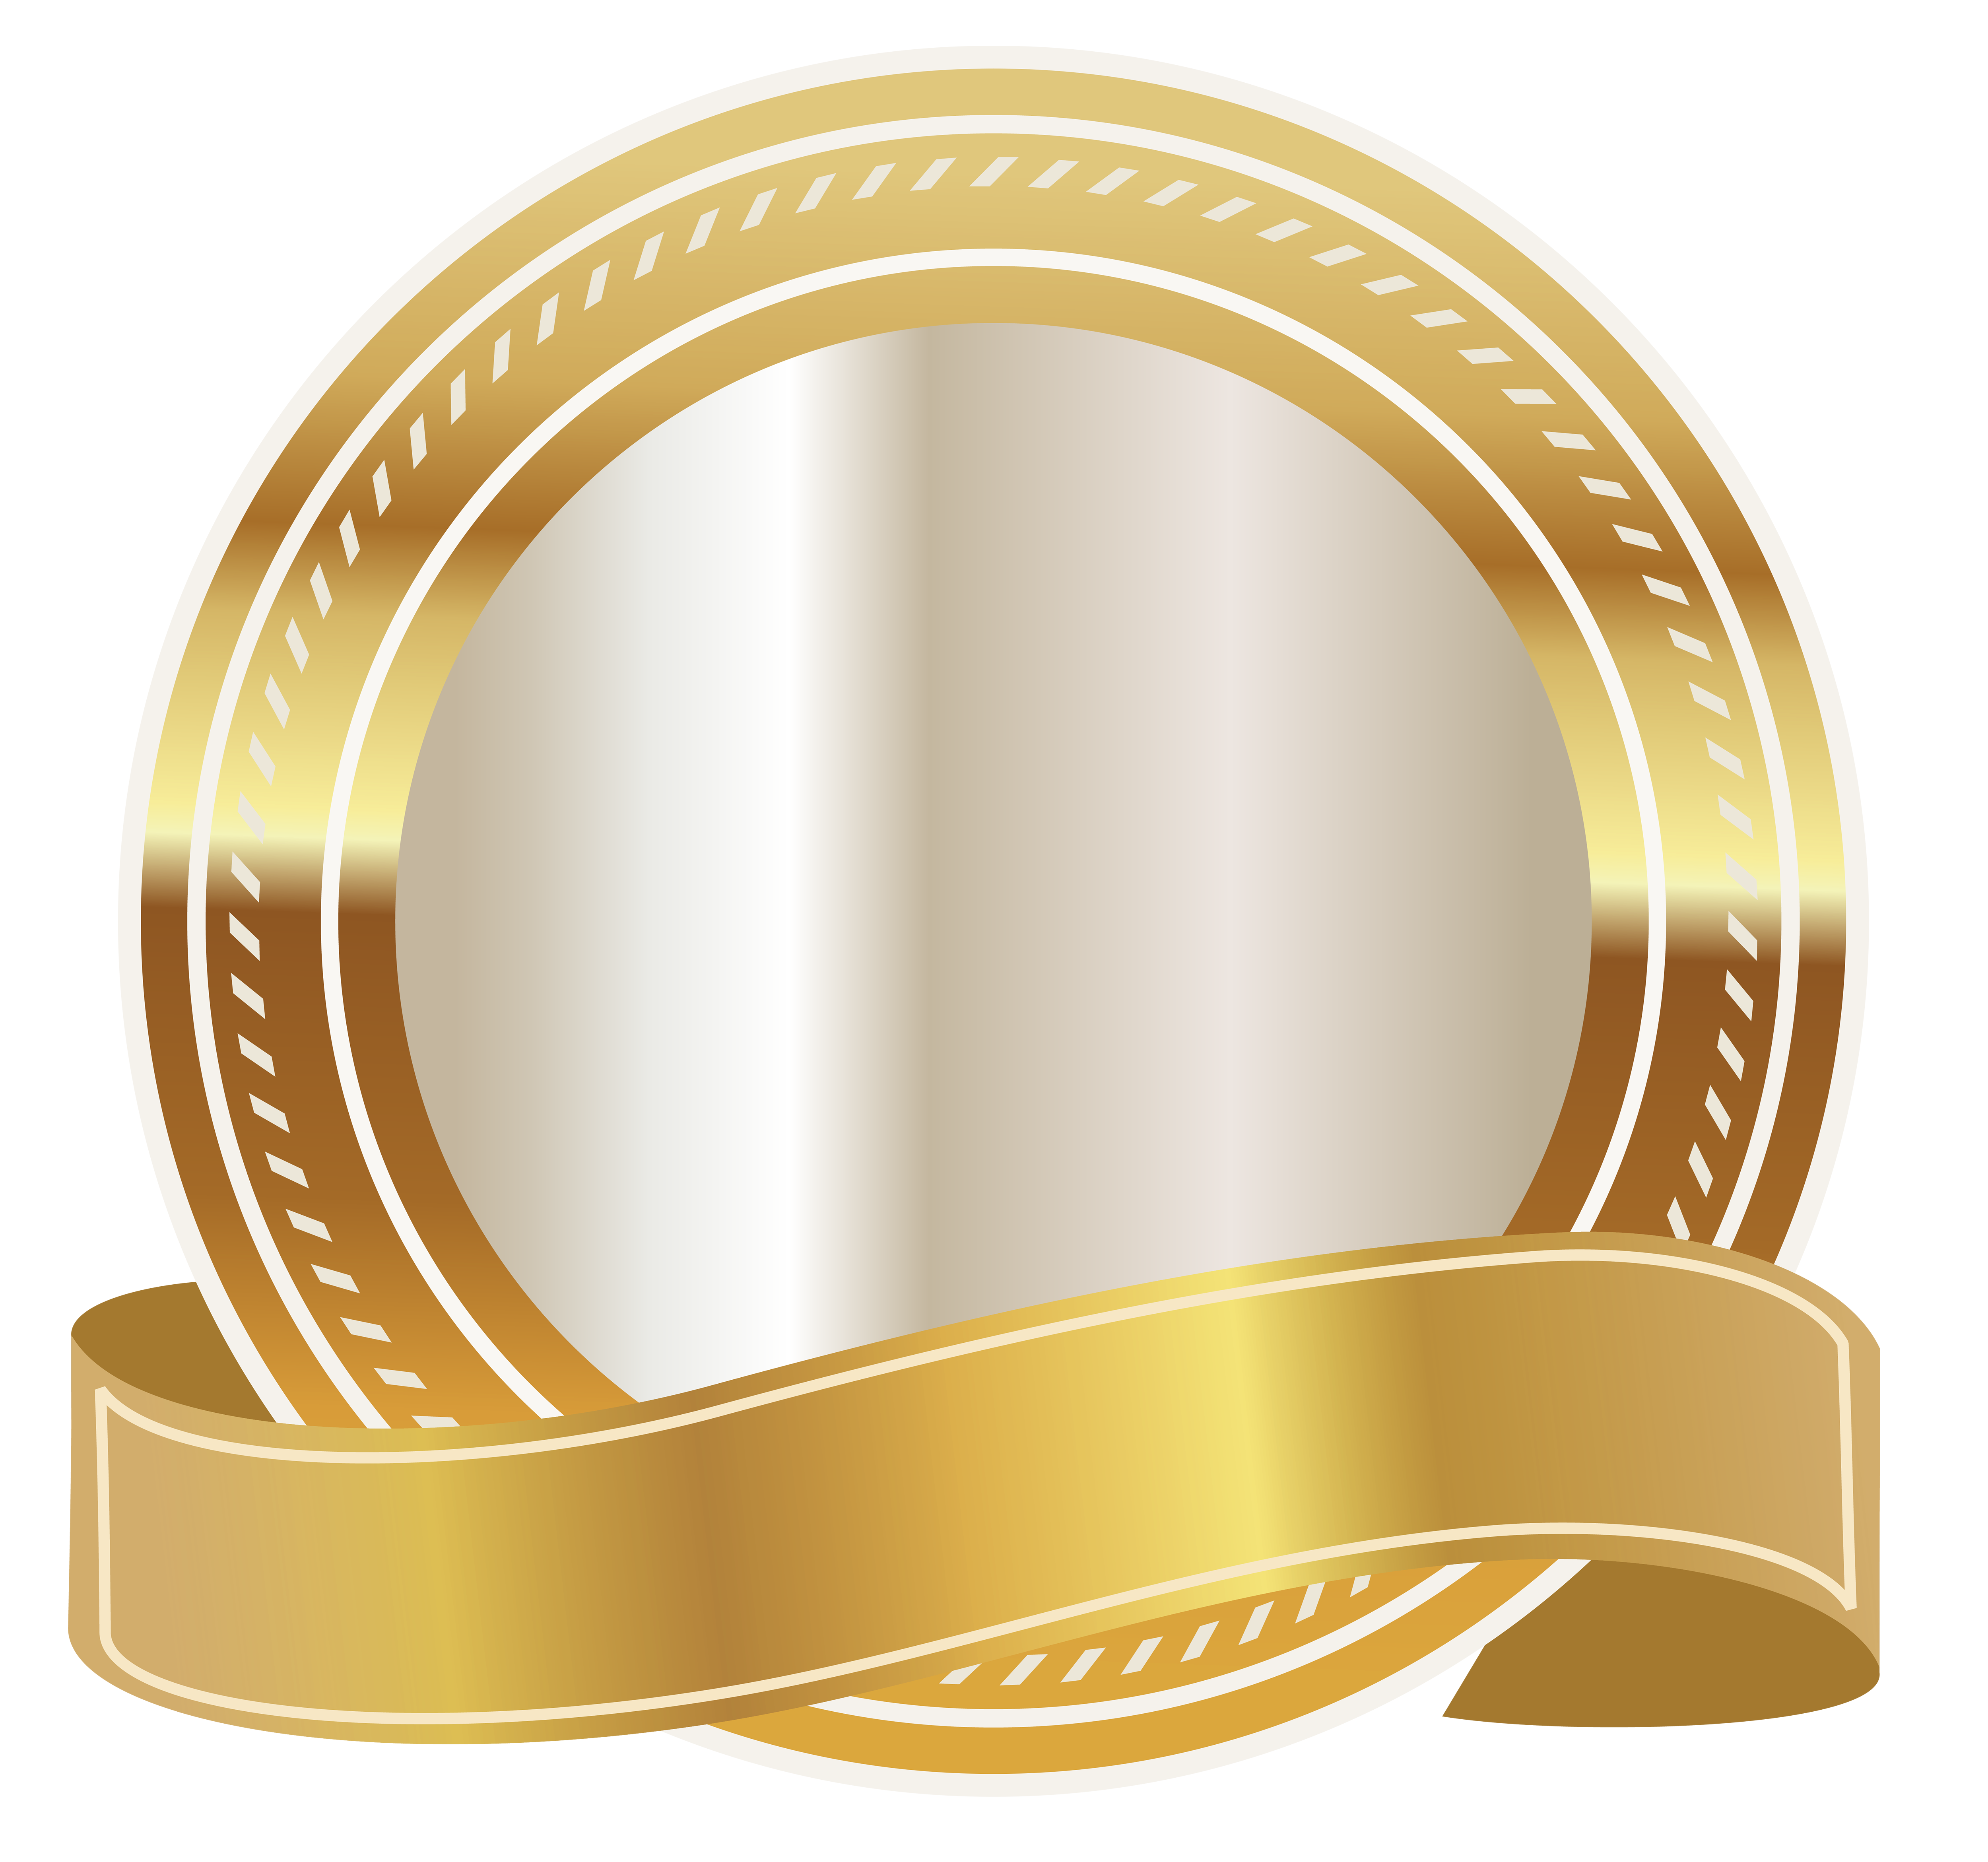 Gold seal with ribbon. Diploma clipart logo design